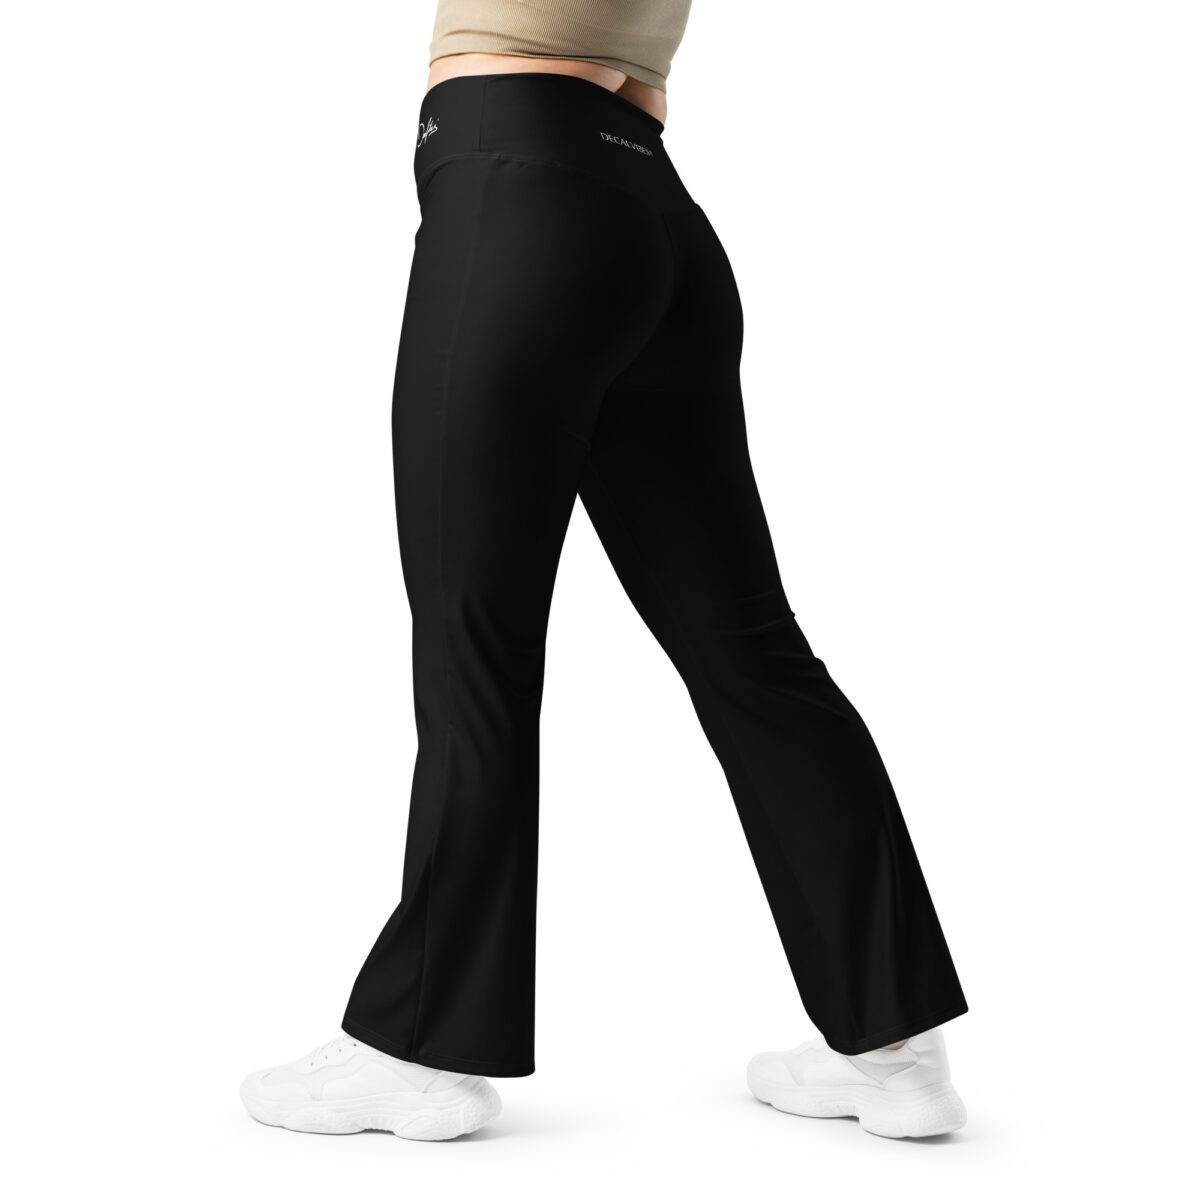 all over print flare leggings white back 6620a3f165a8f high waist leggings mit schlag